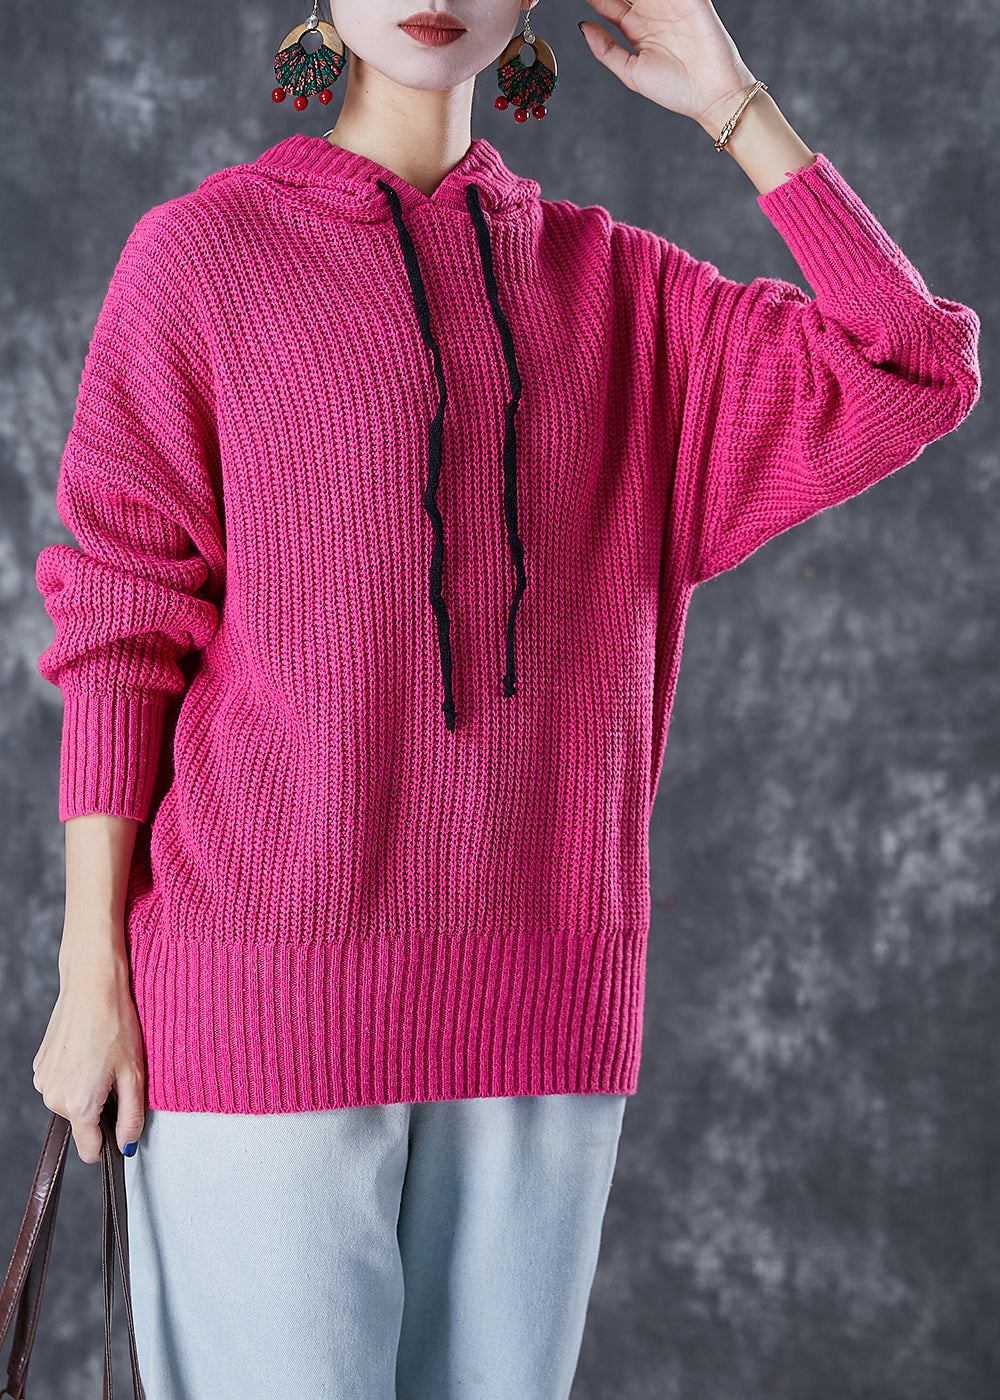 Fashion Rose Hooded Drawstring Knit Sweatshirts Tracksuits Fall